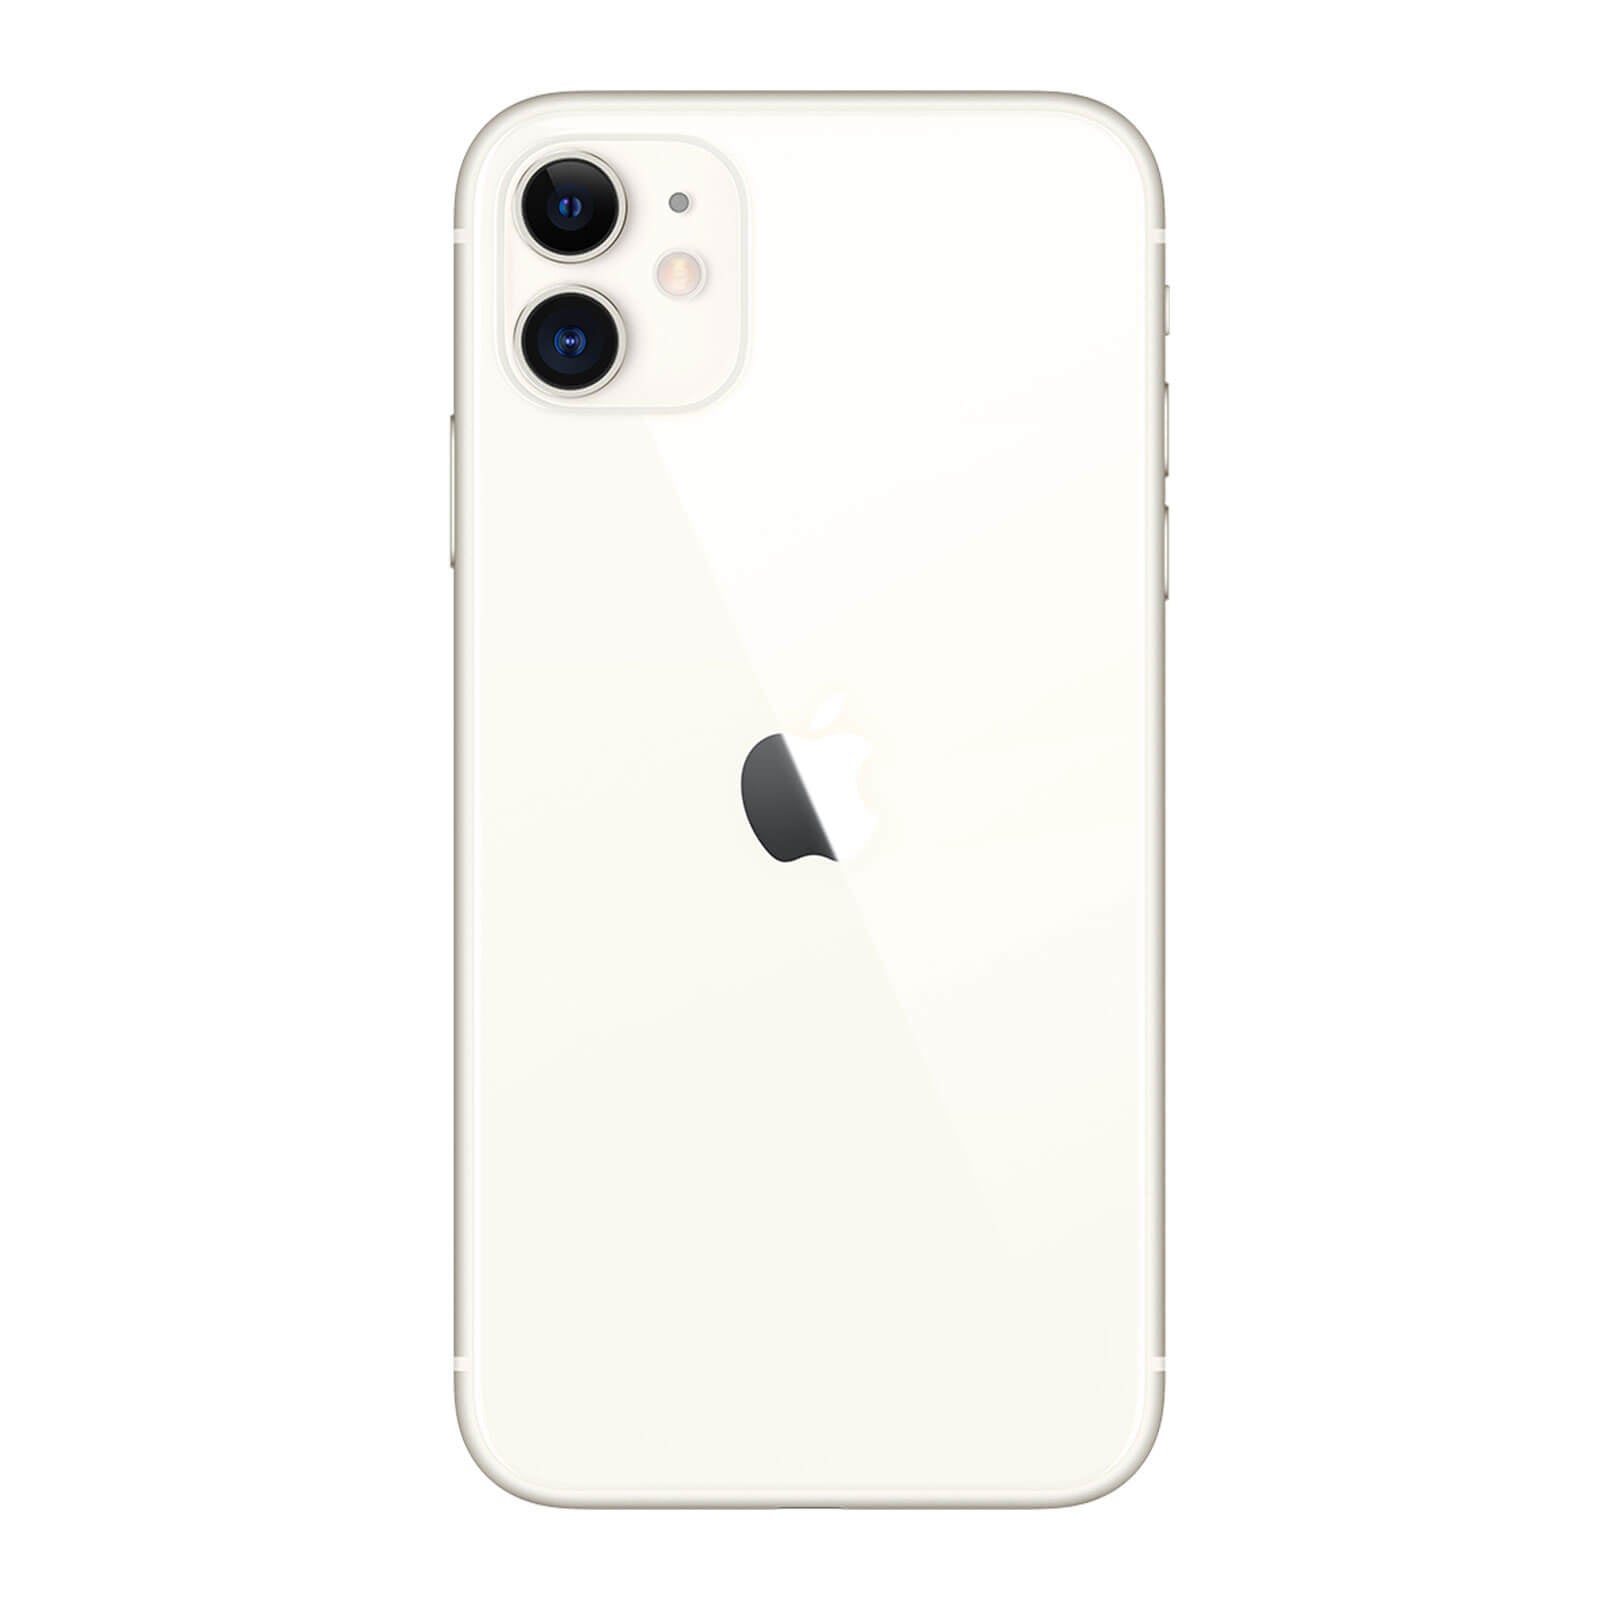 Apple iPhone 11 256GB White Fair - Unlocked